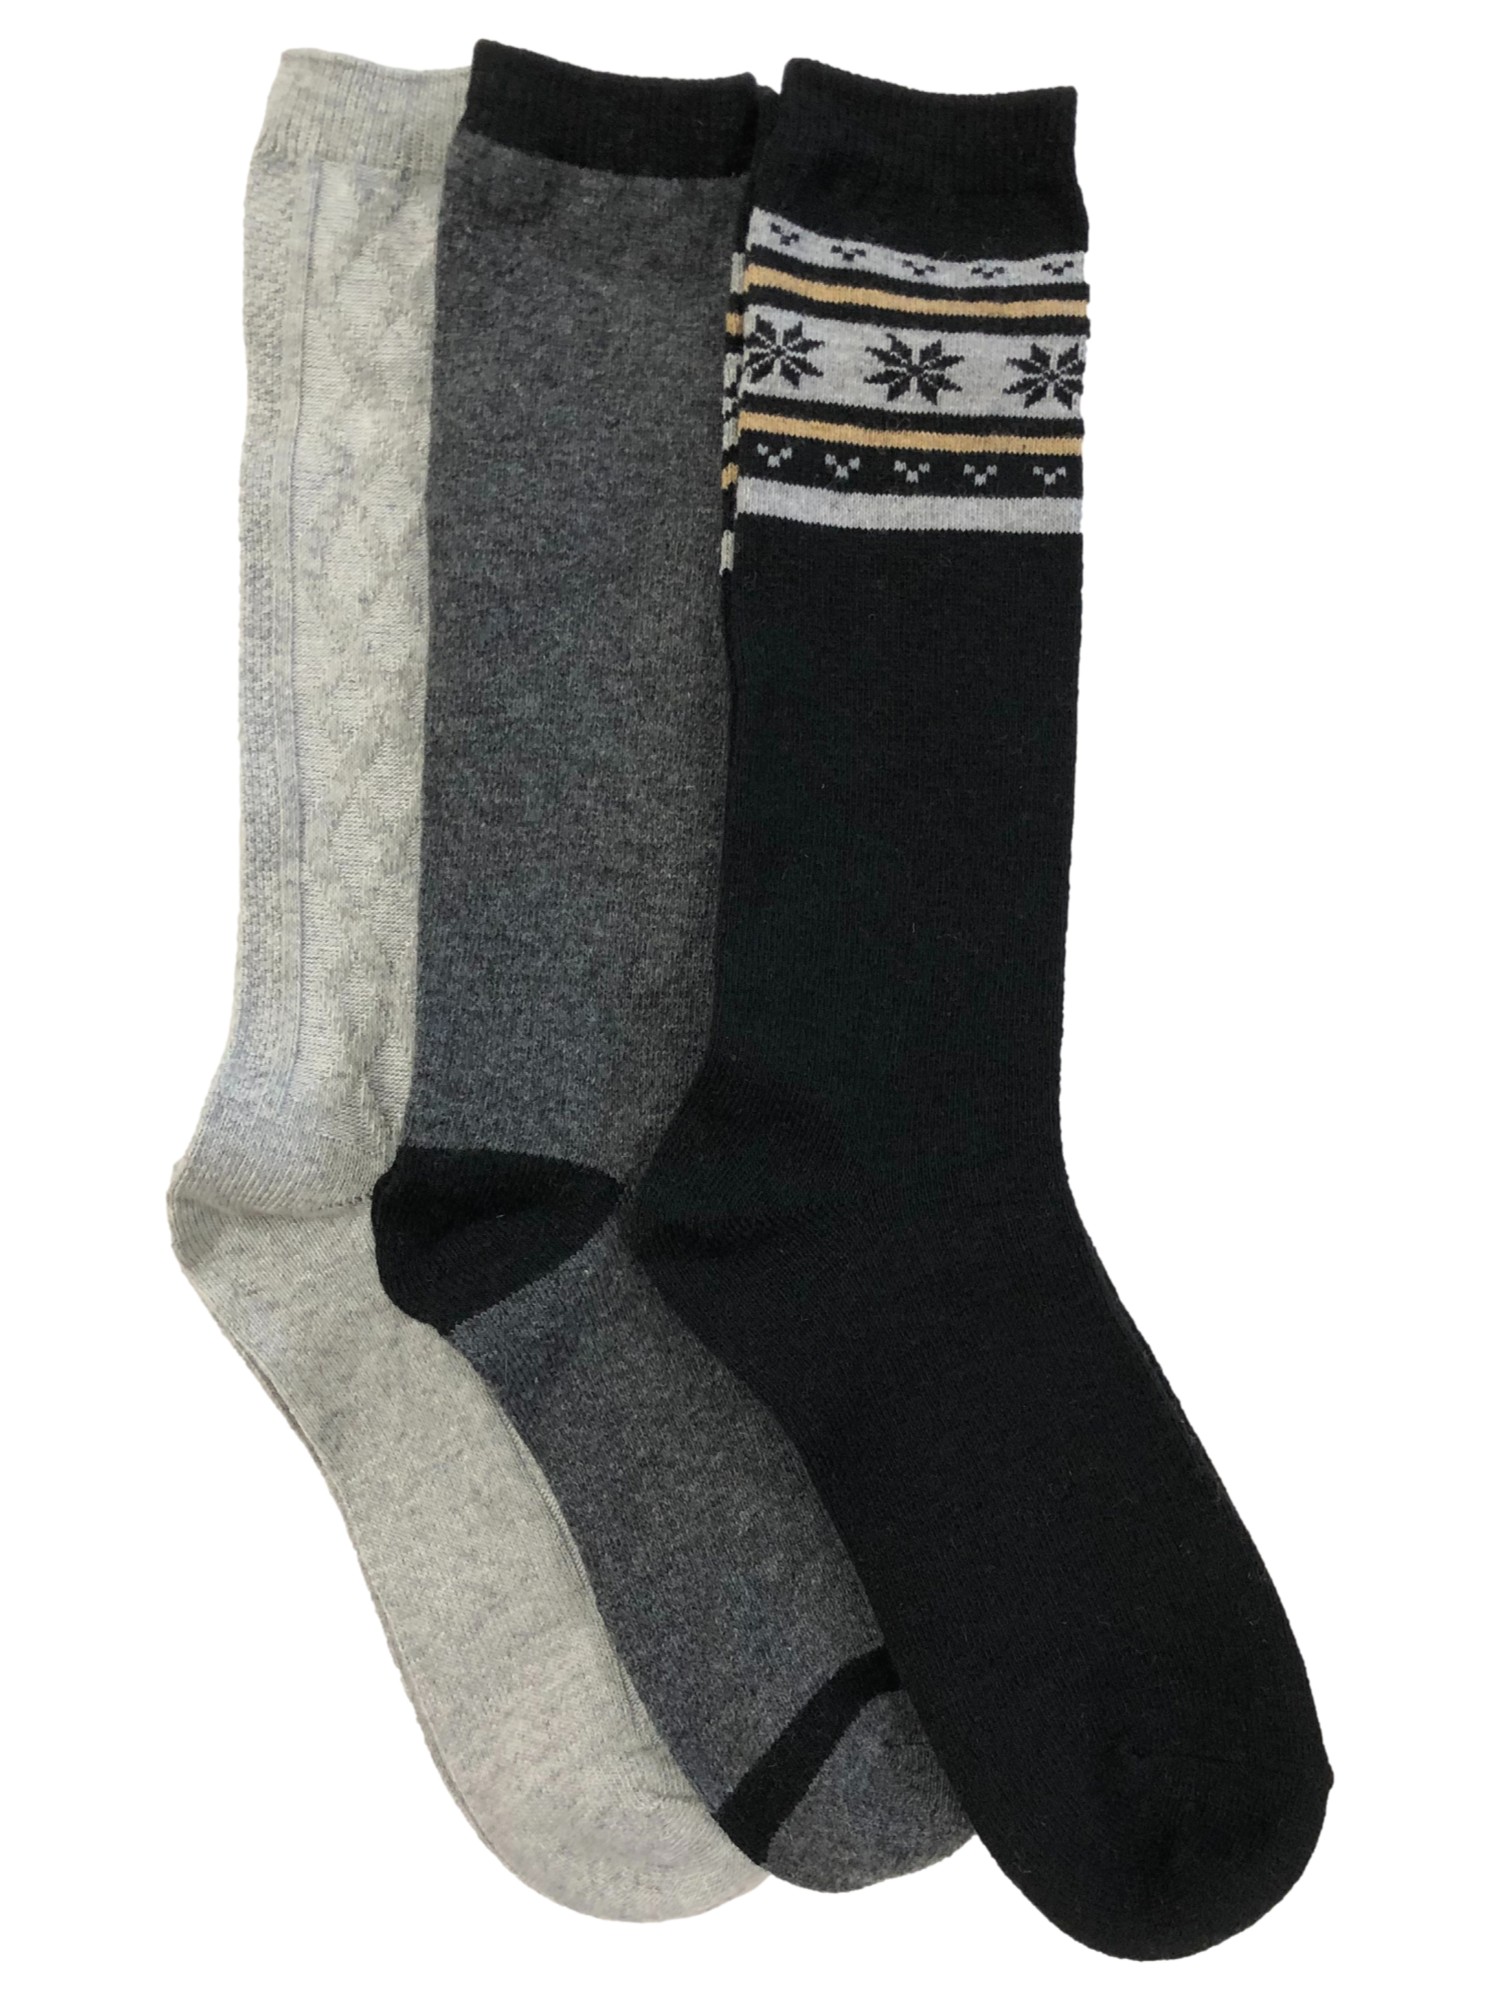 Muk Luks Womens 3 Pair Tall Boot Socks Black & Gray Snowflake